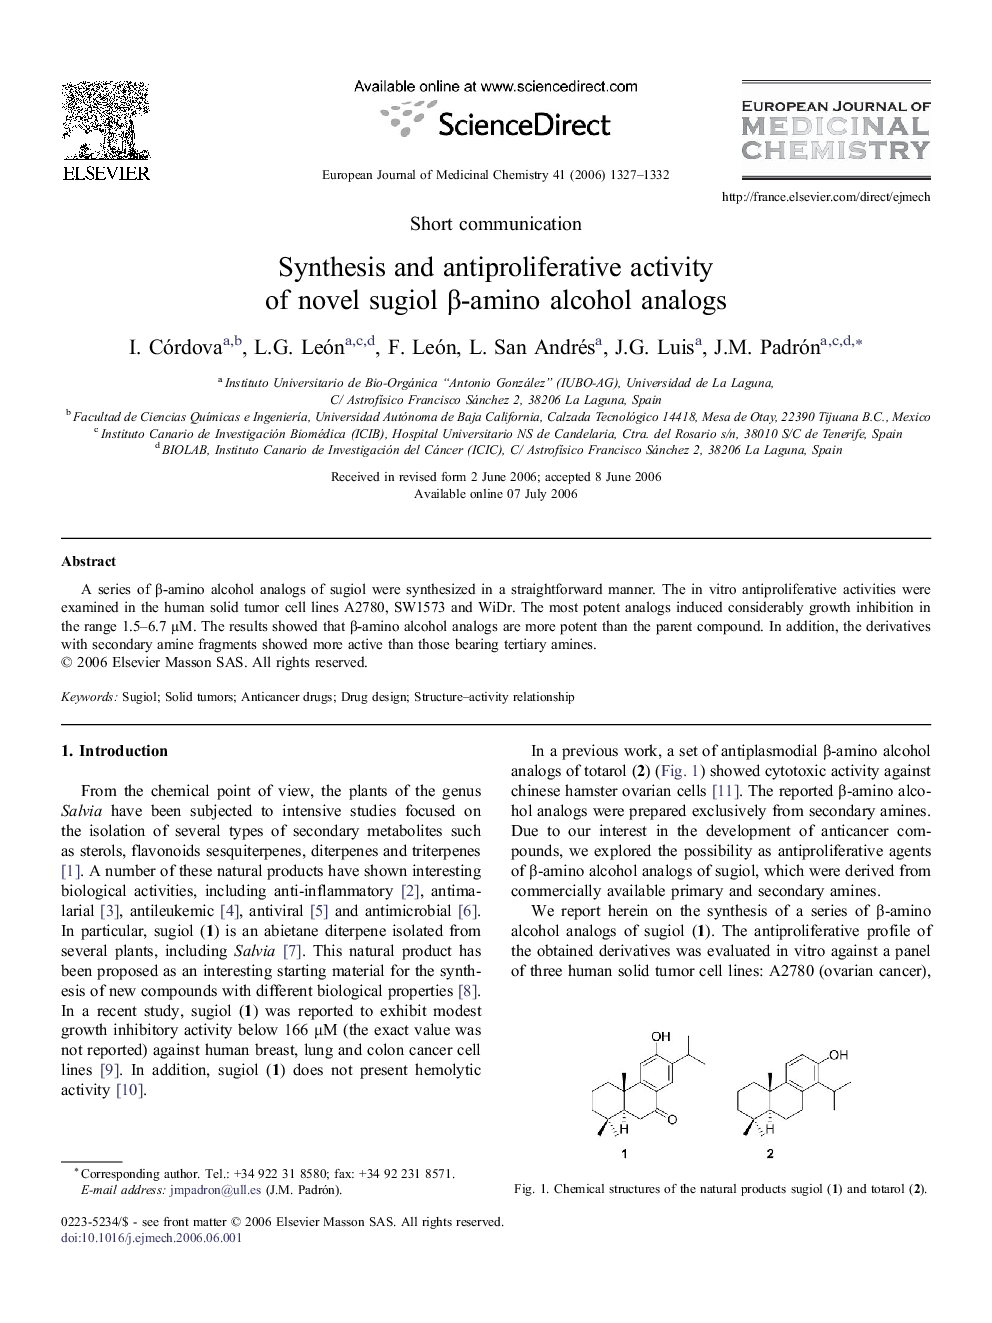 Synthesis and antiproliferative activity of novel sugiol β-amino alcohol analogs